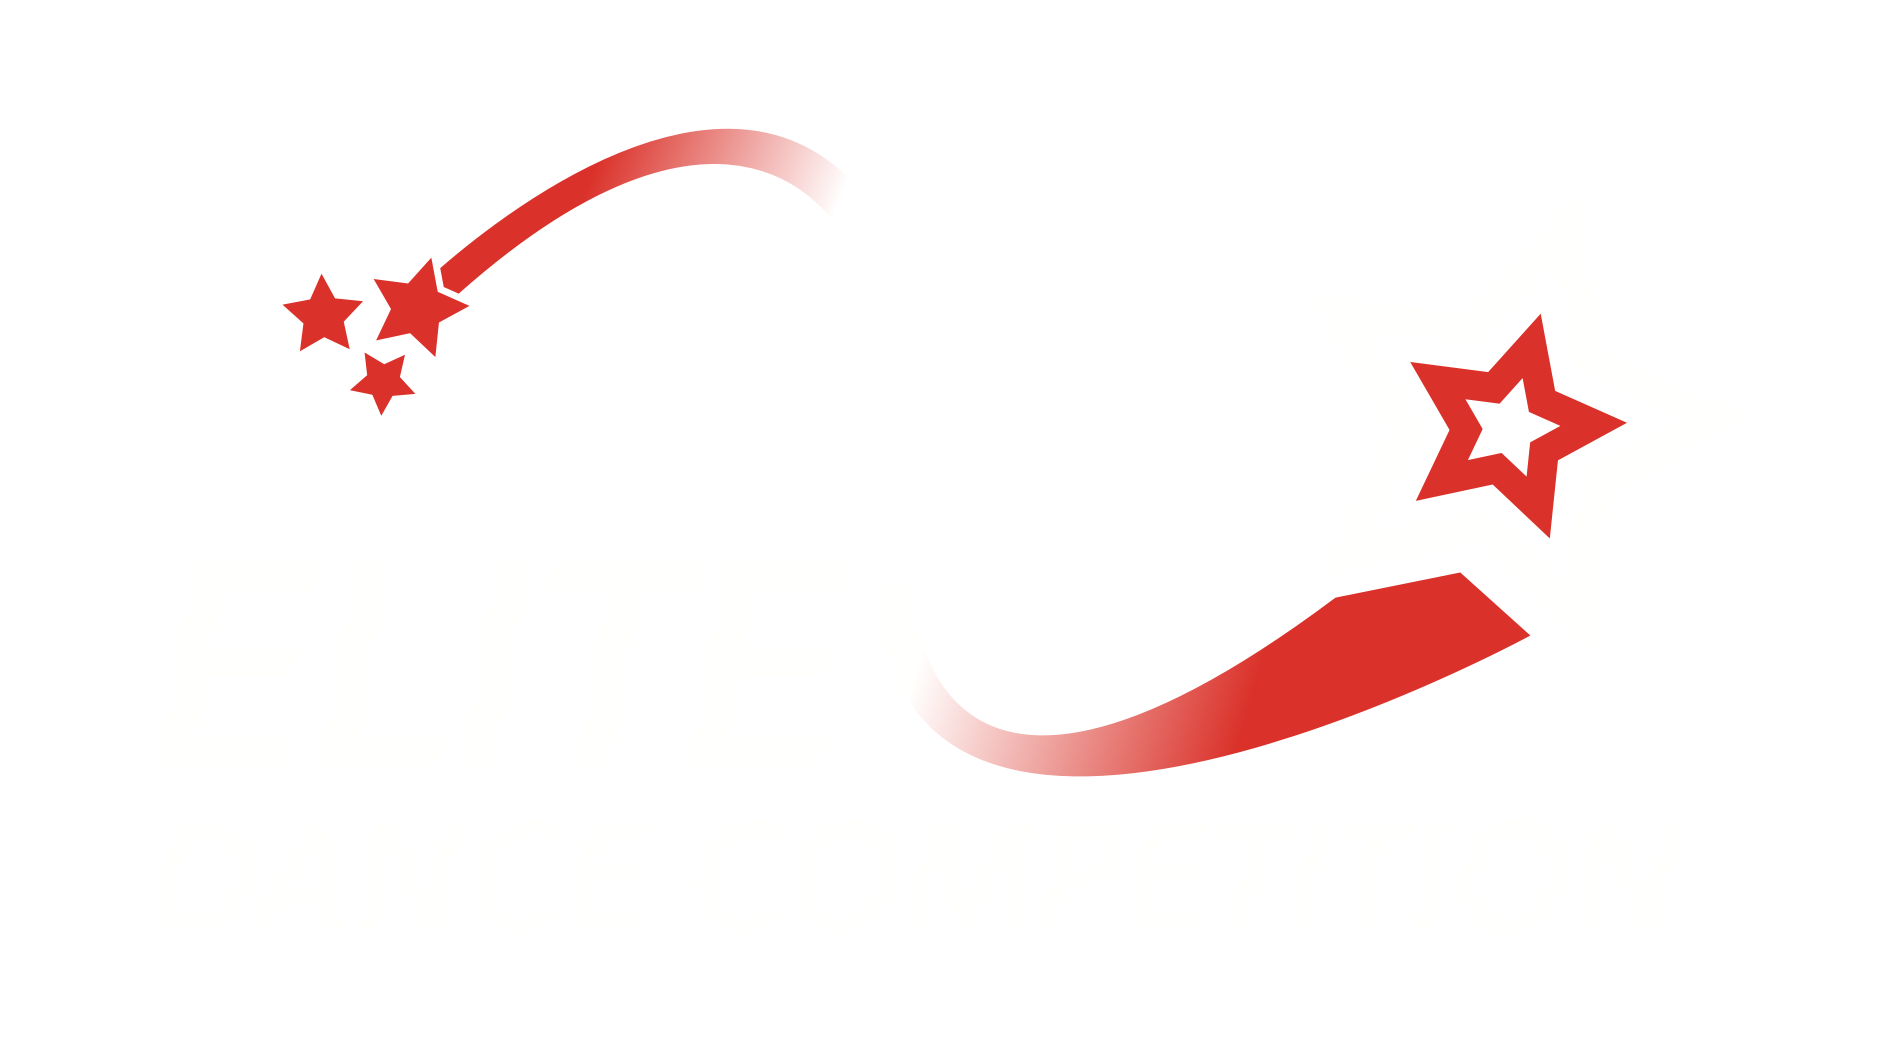 5678 Elite Dance